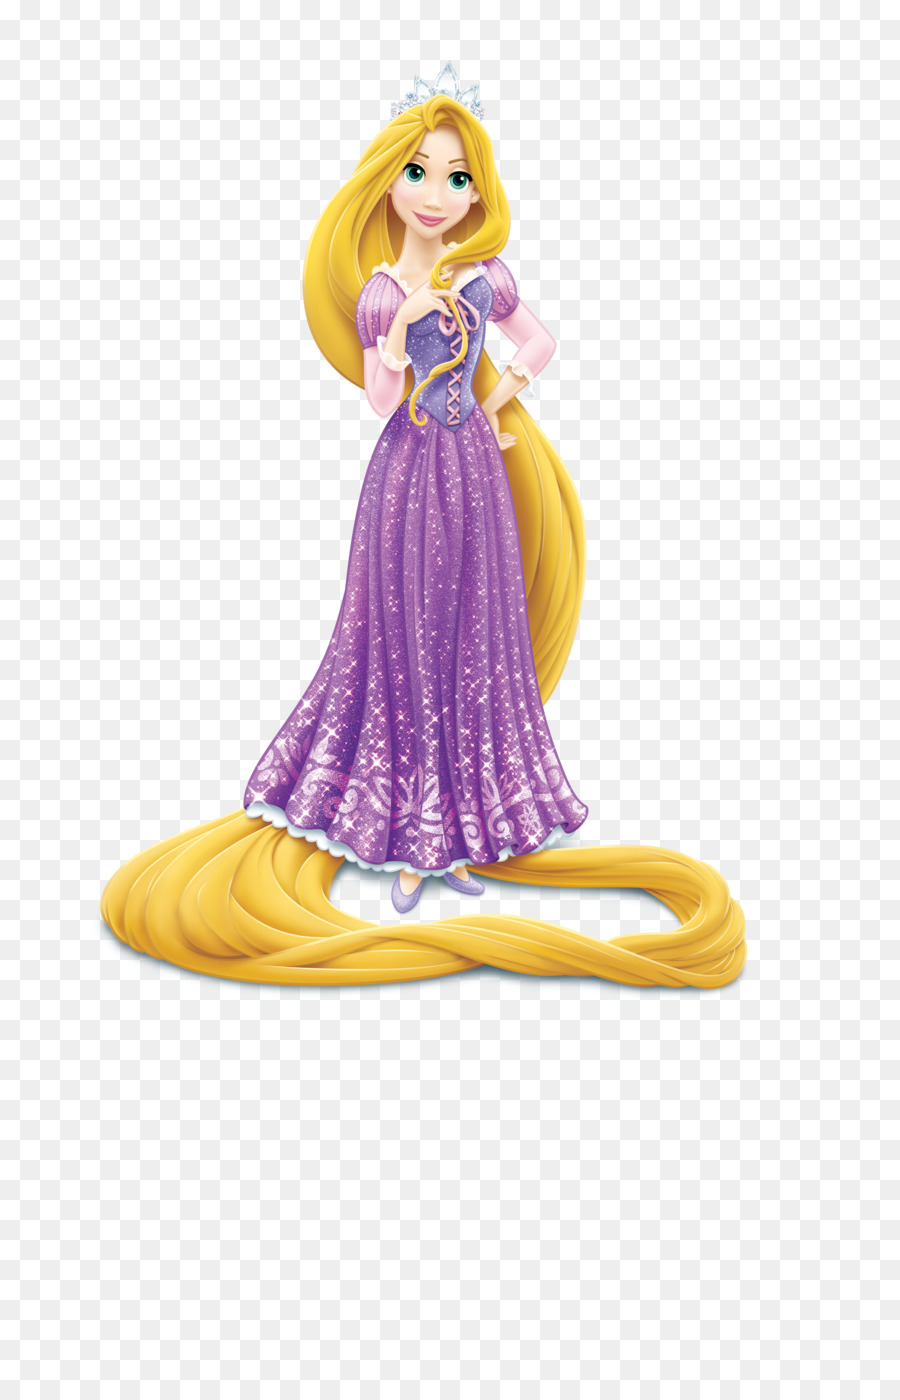 Rapunzel Ariel Disney Princess - Barbie doll png download - 3125*4850 - Free Transparent Rapunzel png Download.